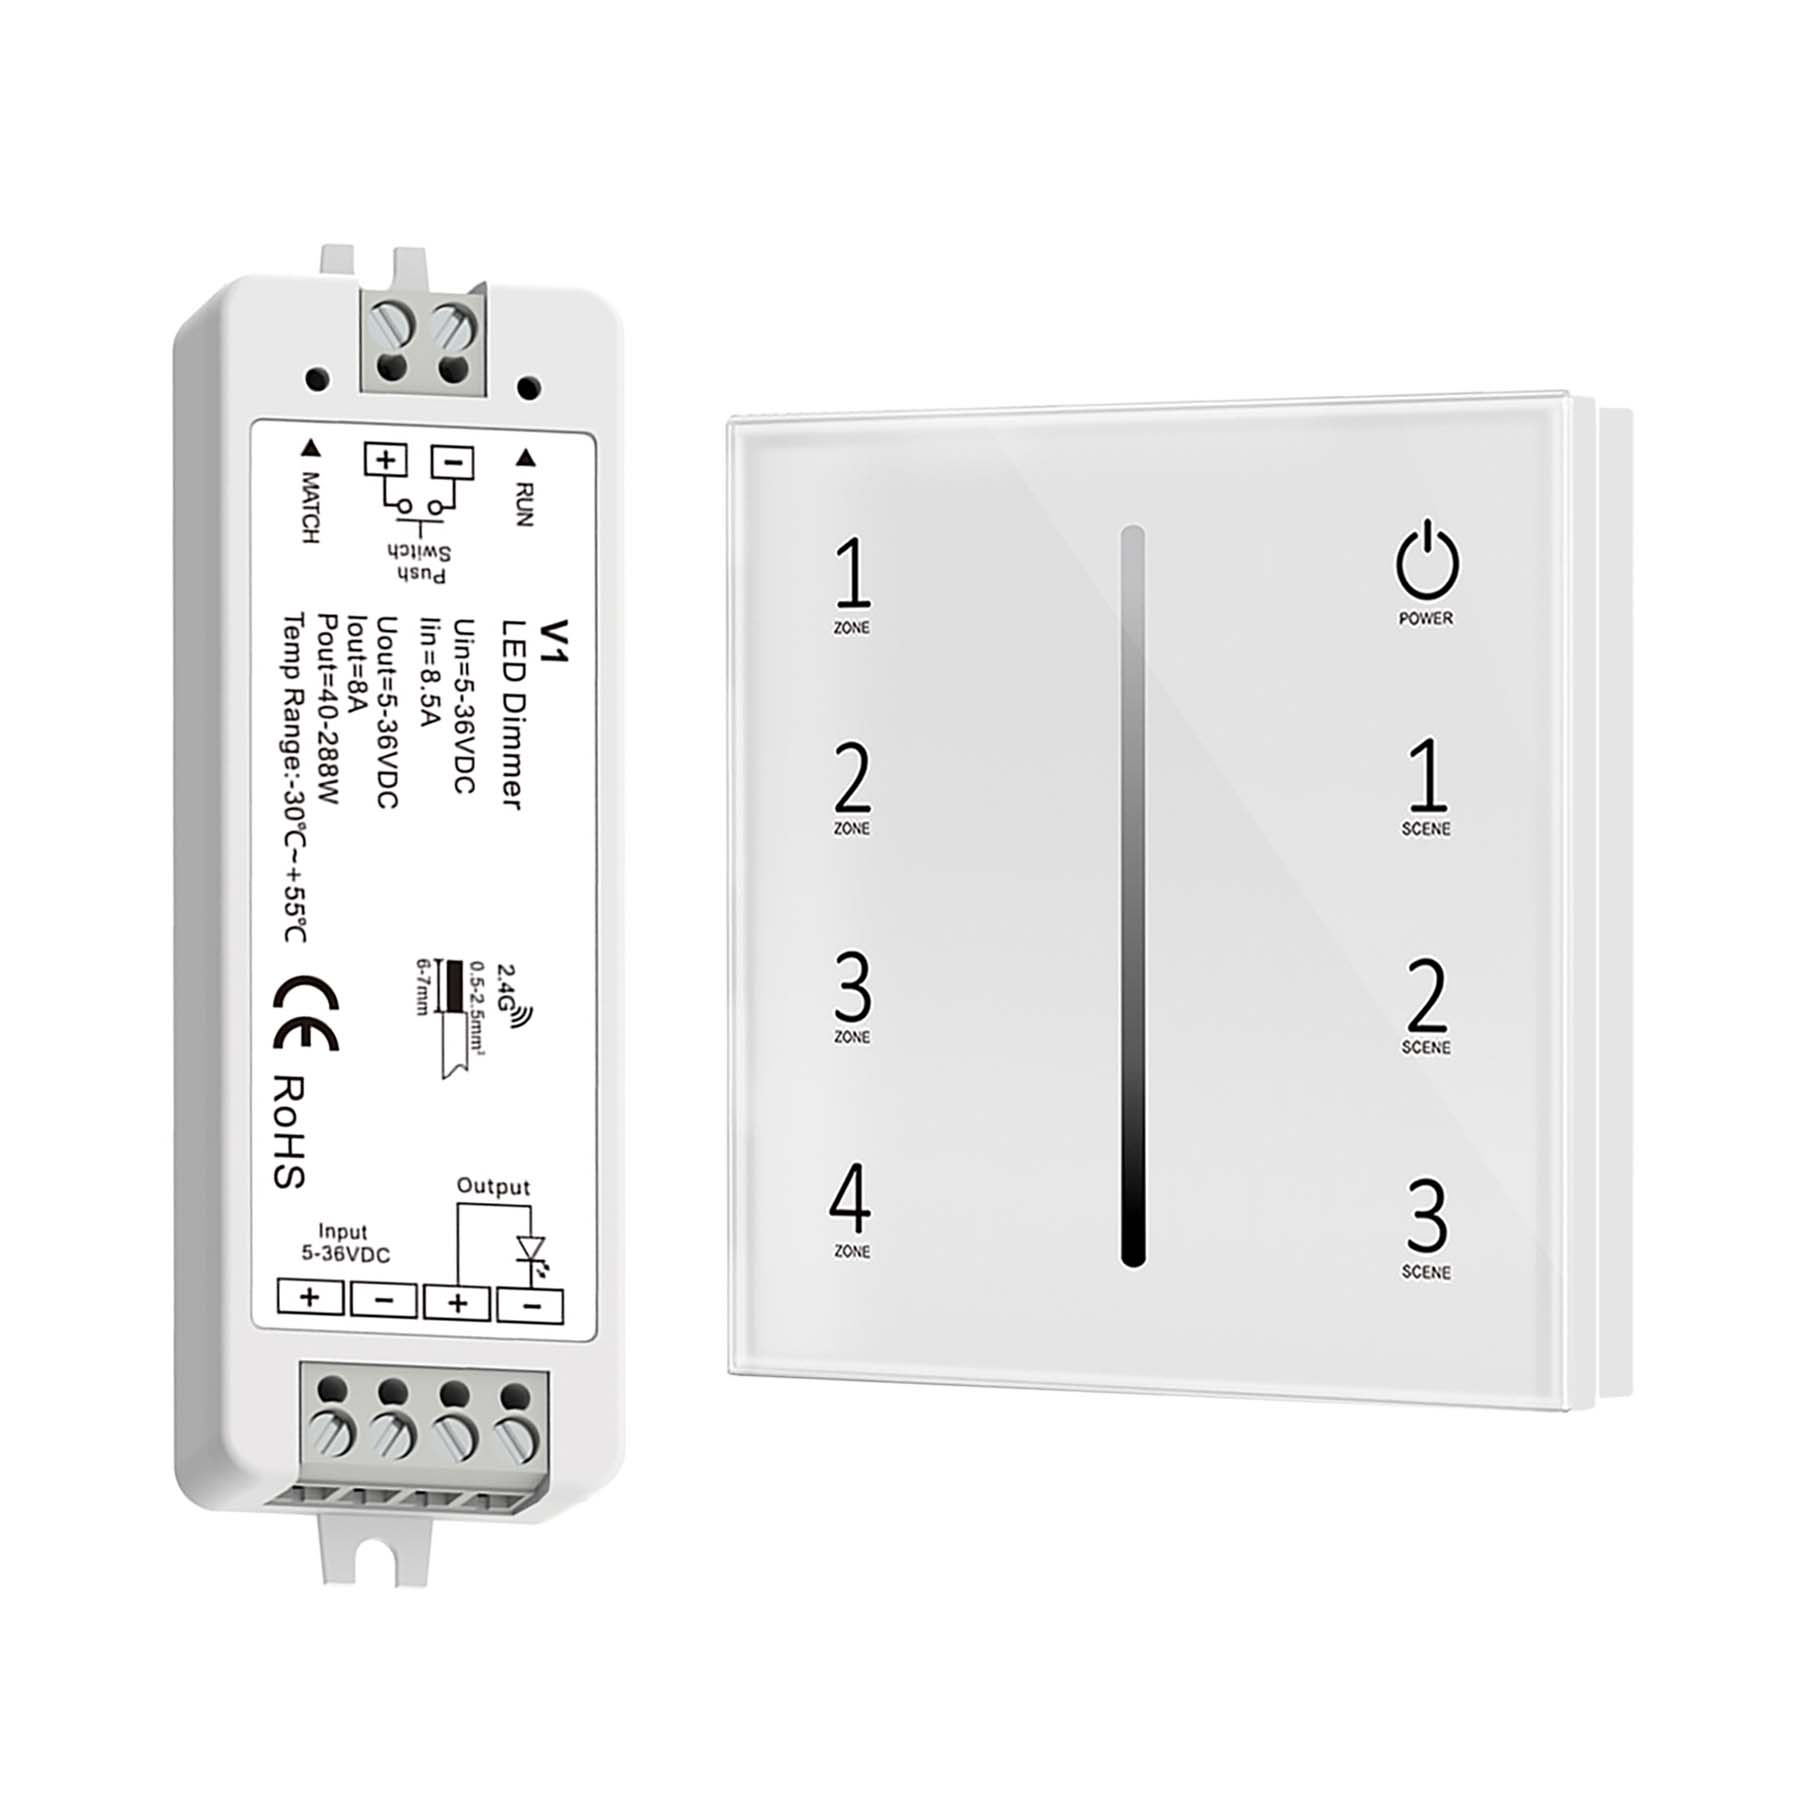 G.W.S. LED White LED 5-36V DC Dimming Controller V1 + 4 Zone Panel Remote Control 100-240V AC Input T11-1 (Black)